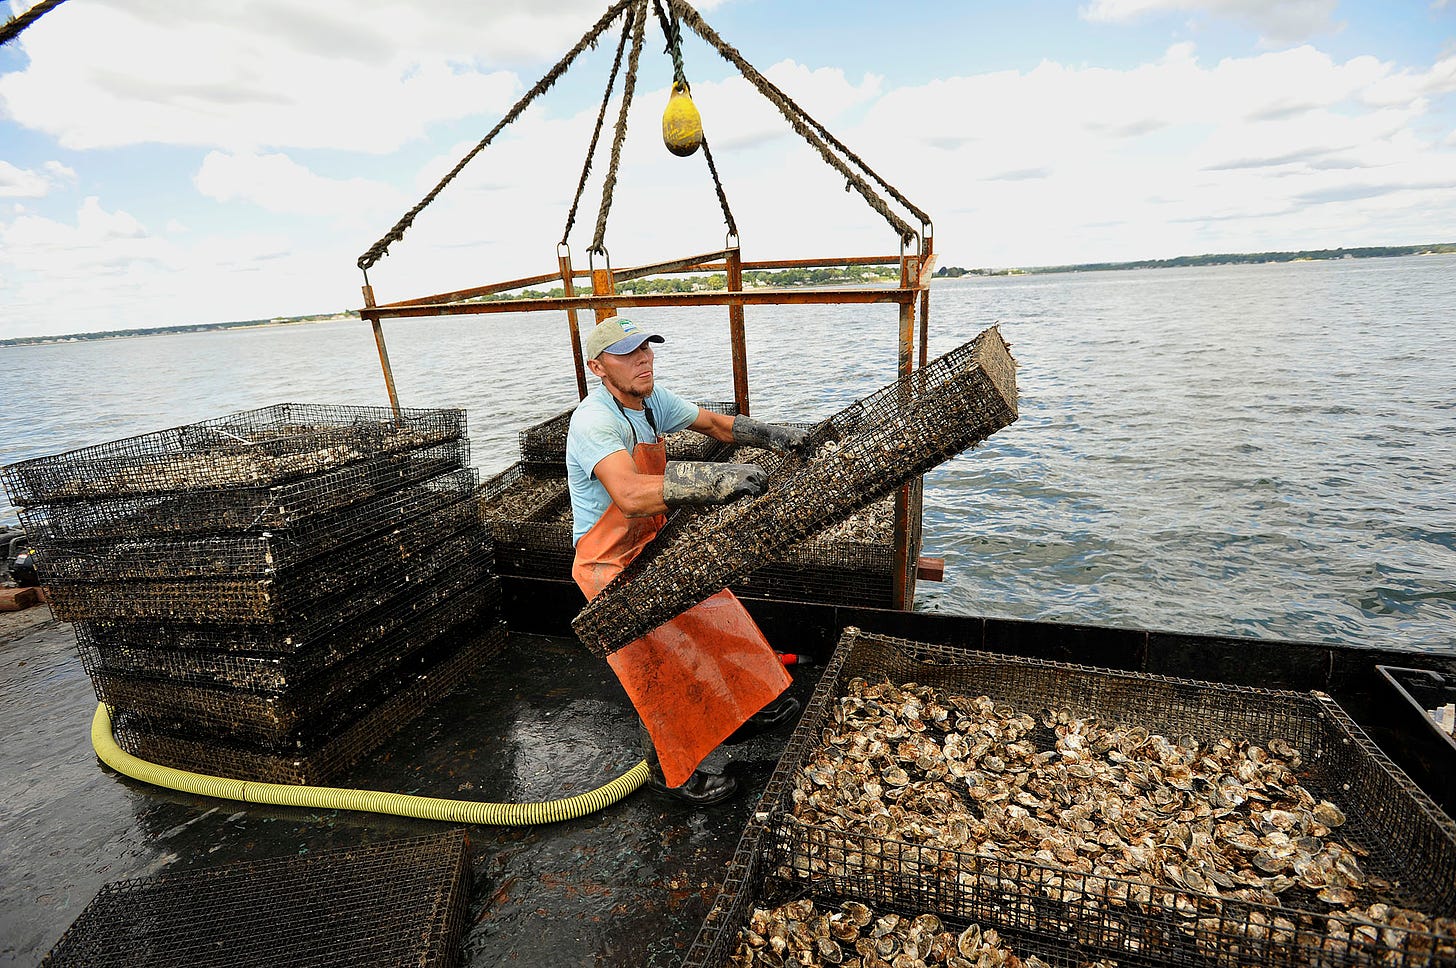 Stamford oystermen find 80-hour work weeks worthwhile